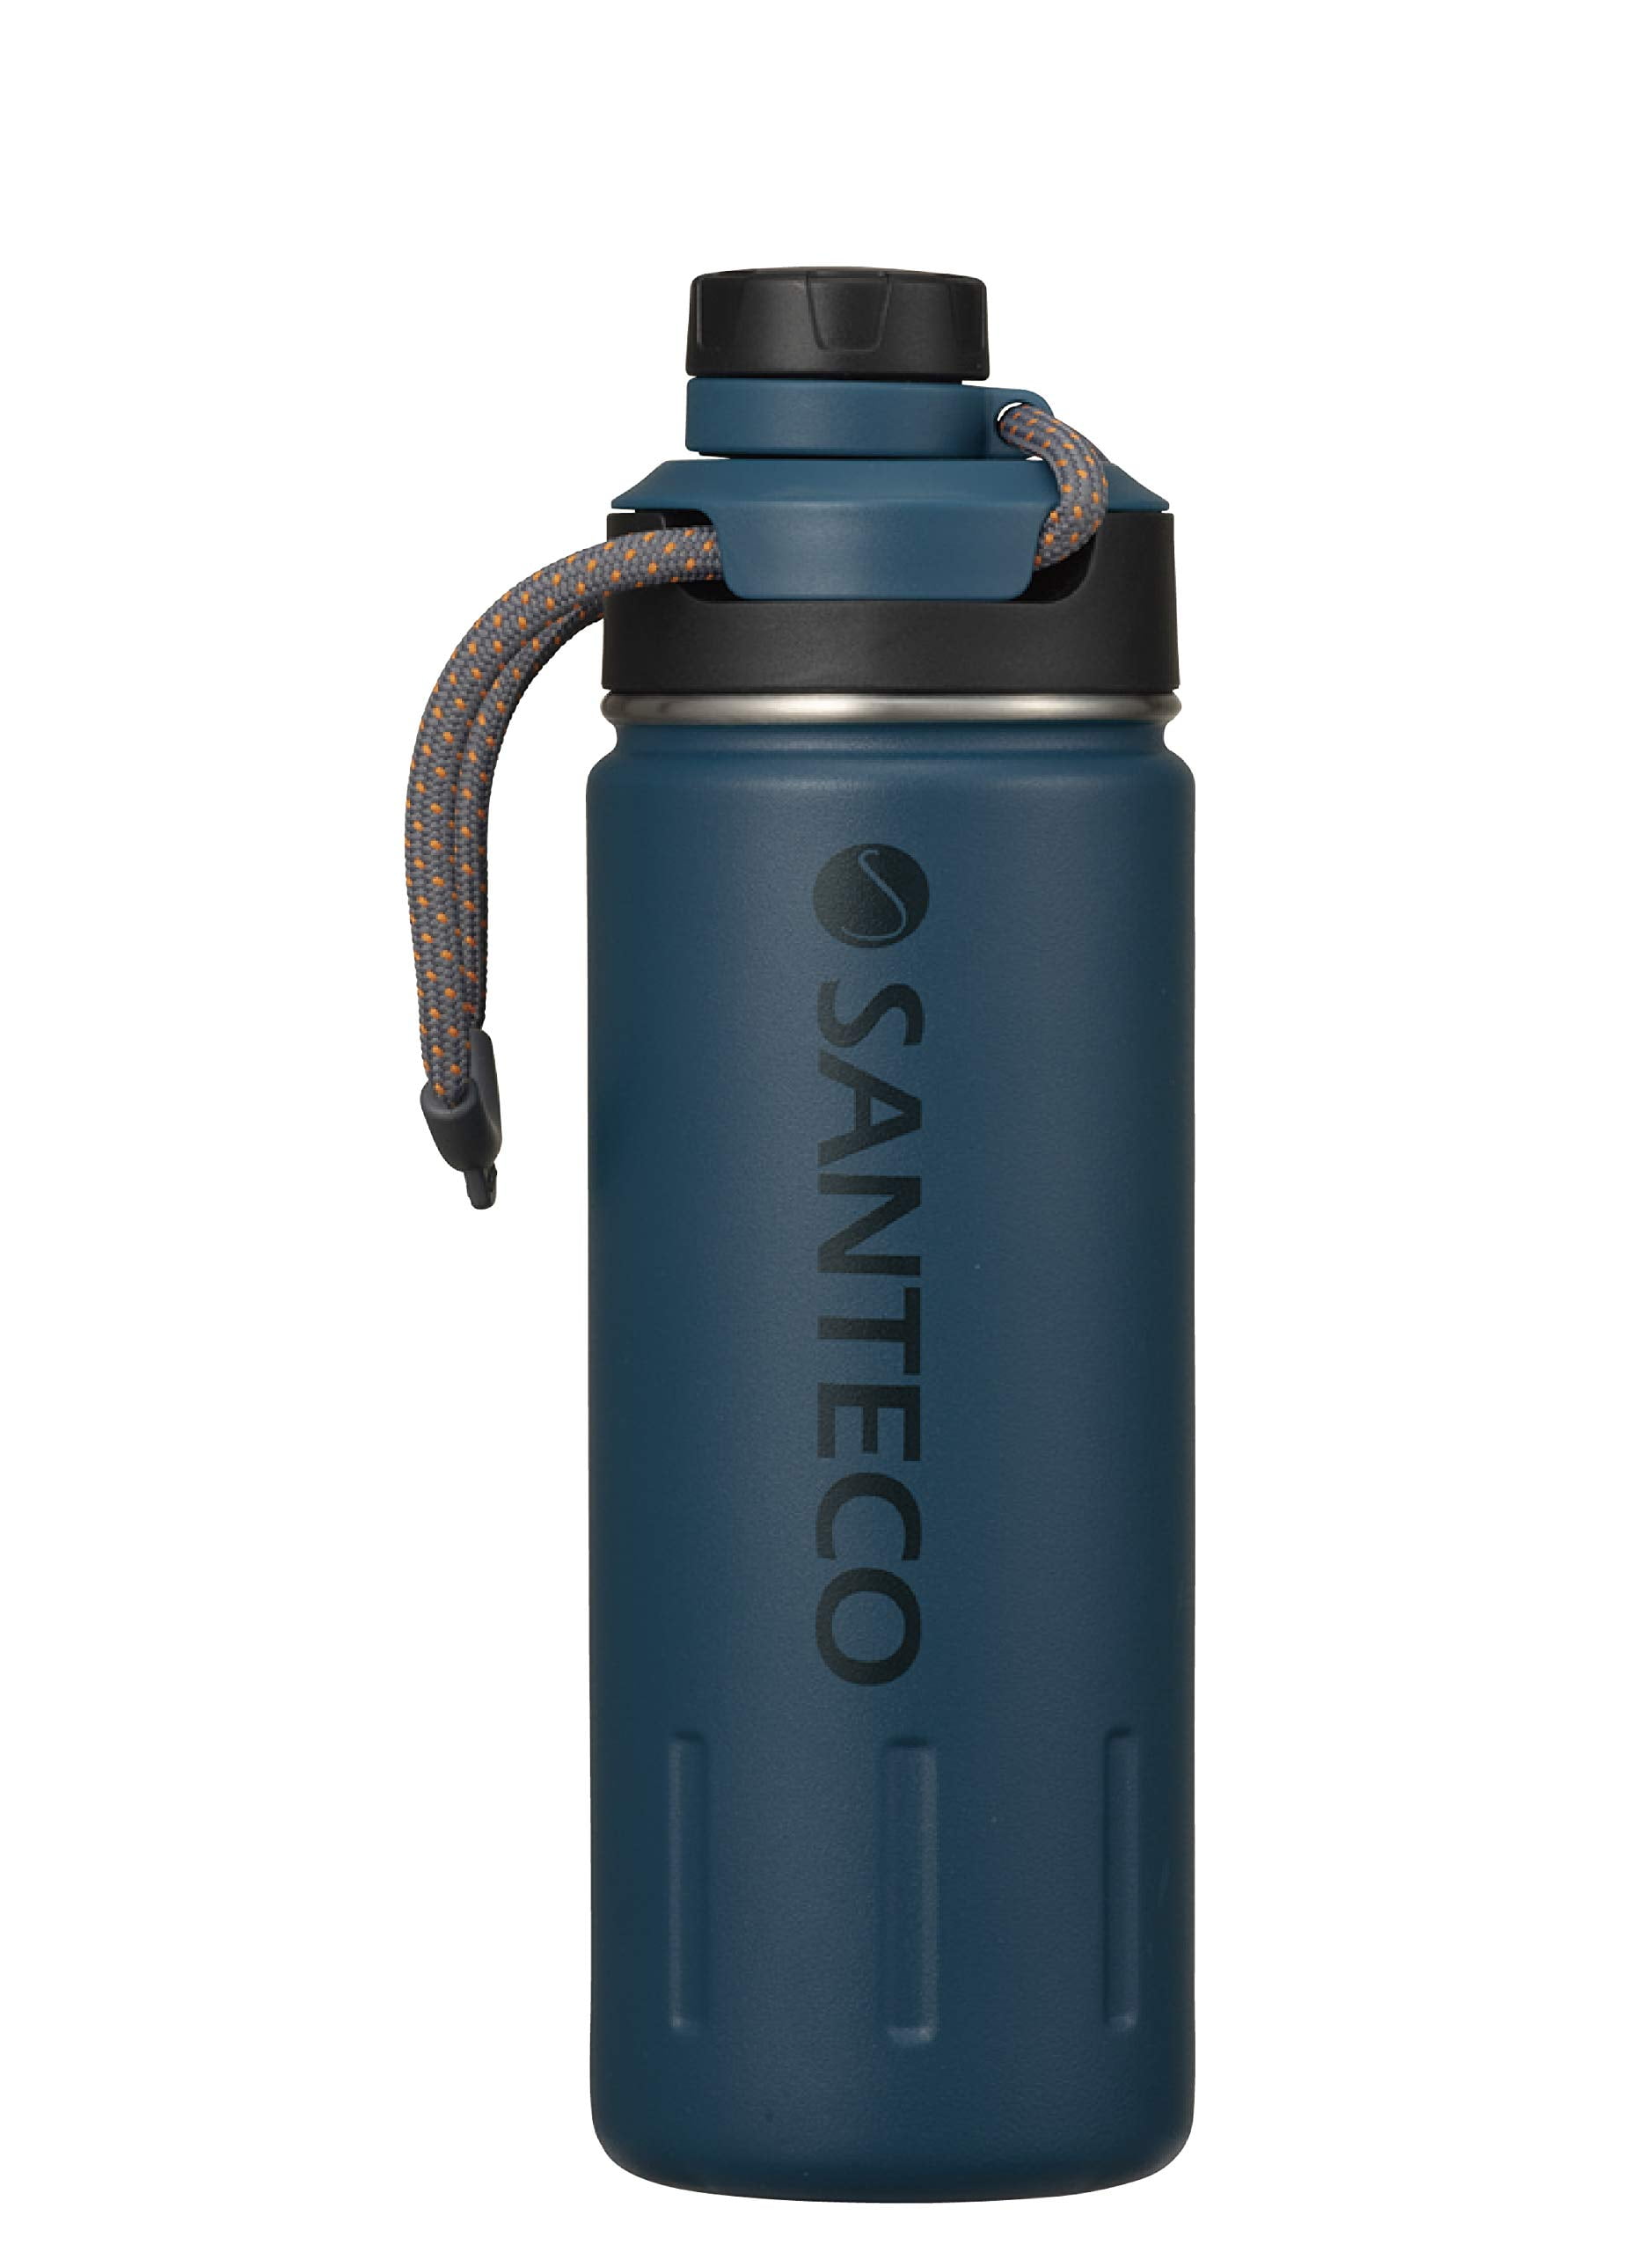 SANTECO Kolima Vacuum Flask, 17 oz, Stainless Steel, Vacuum Insulated, Ocean Blue